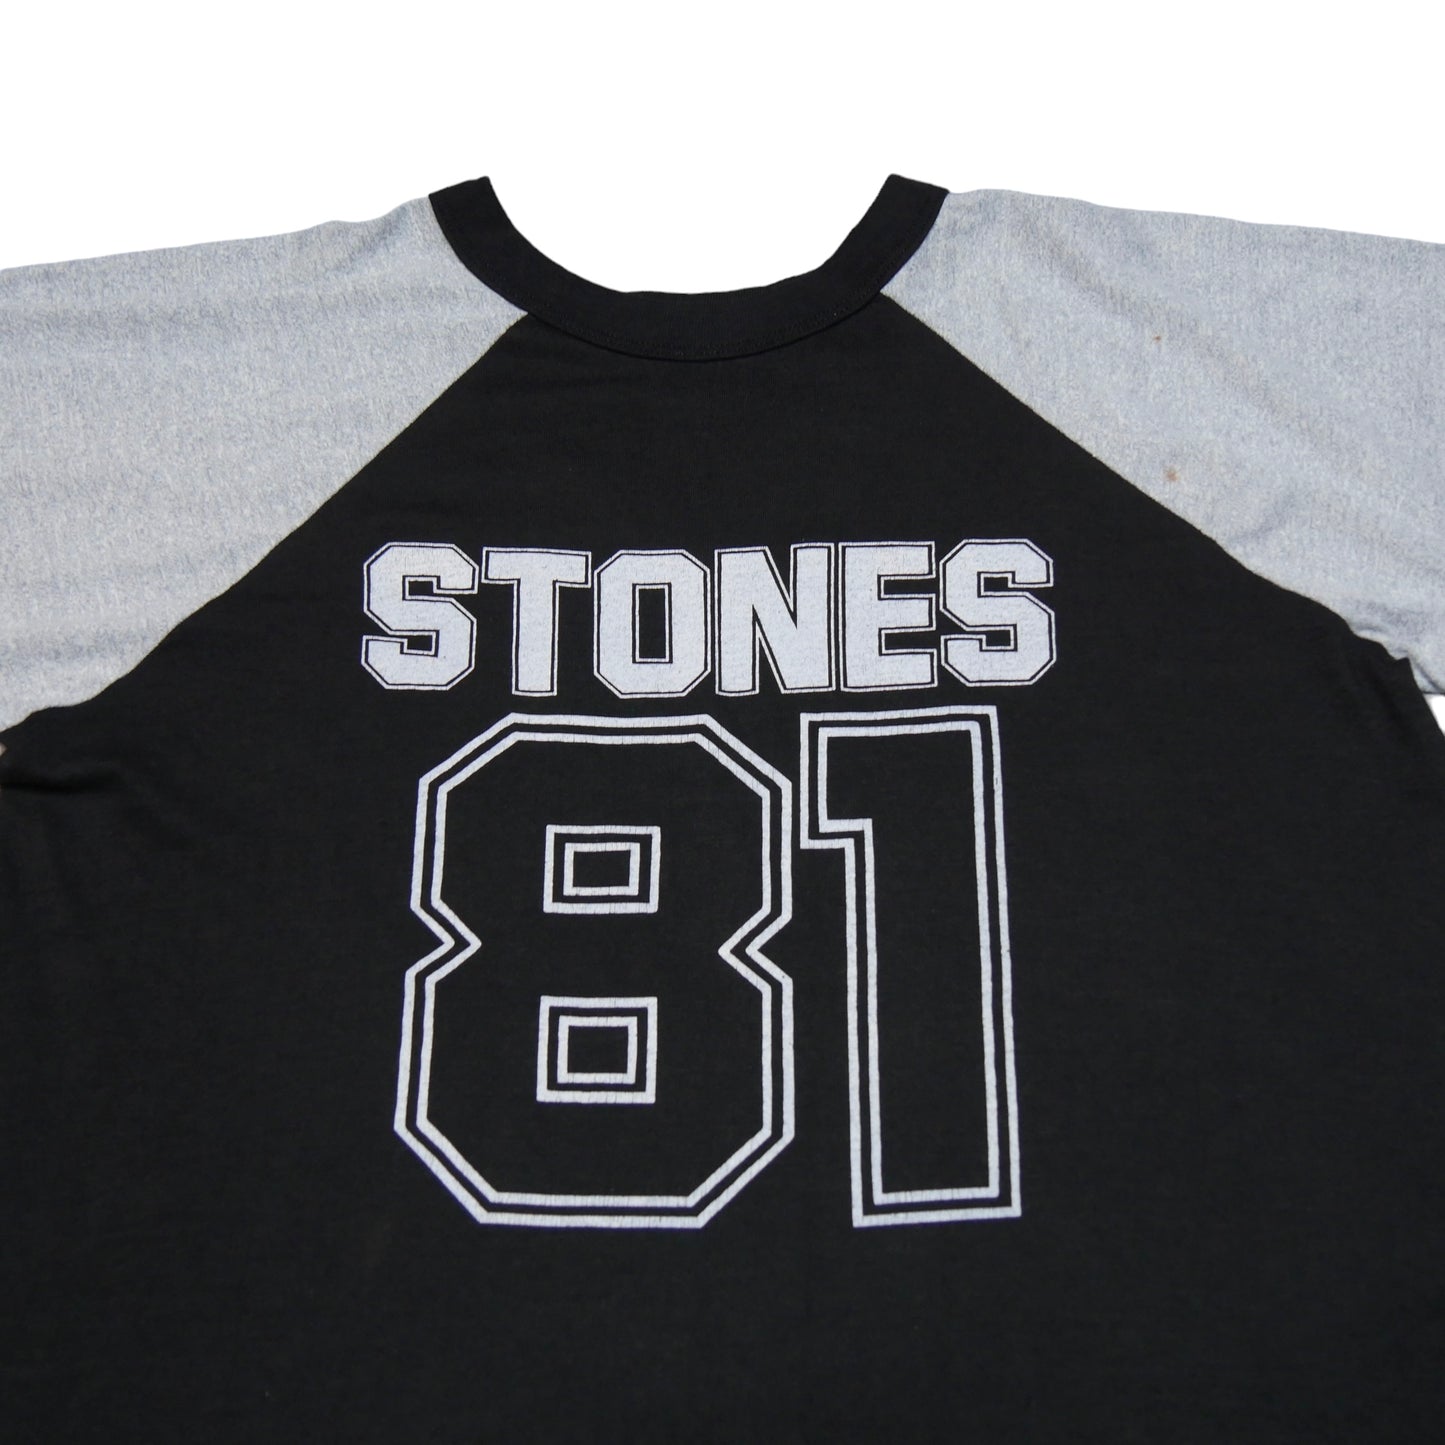 Rolling Stones 81 Shirt -XL